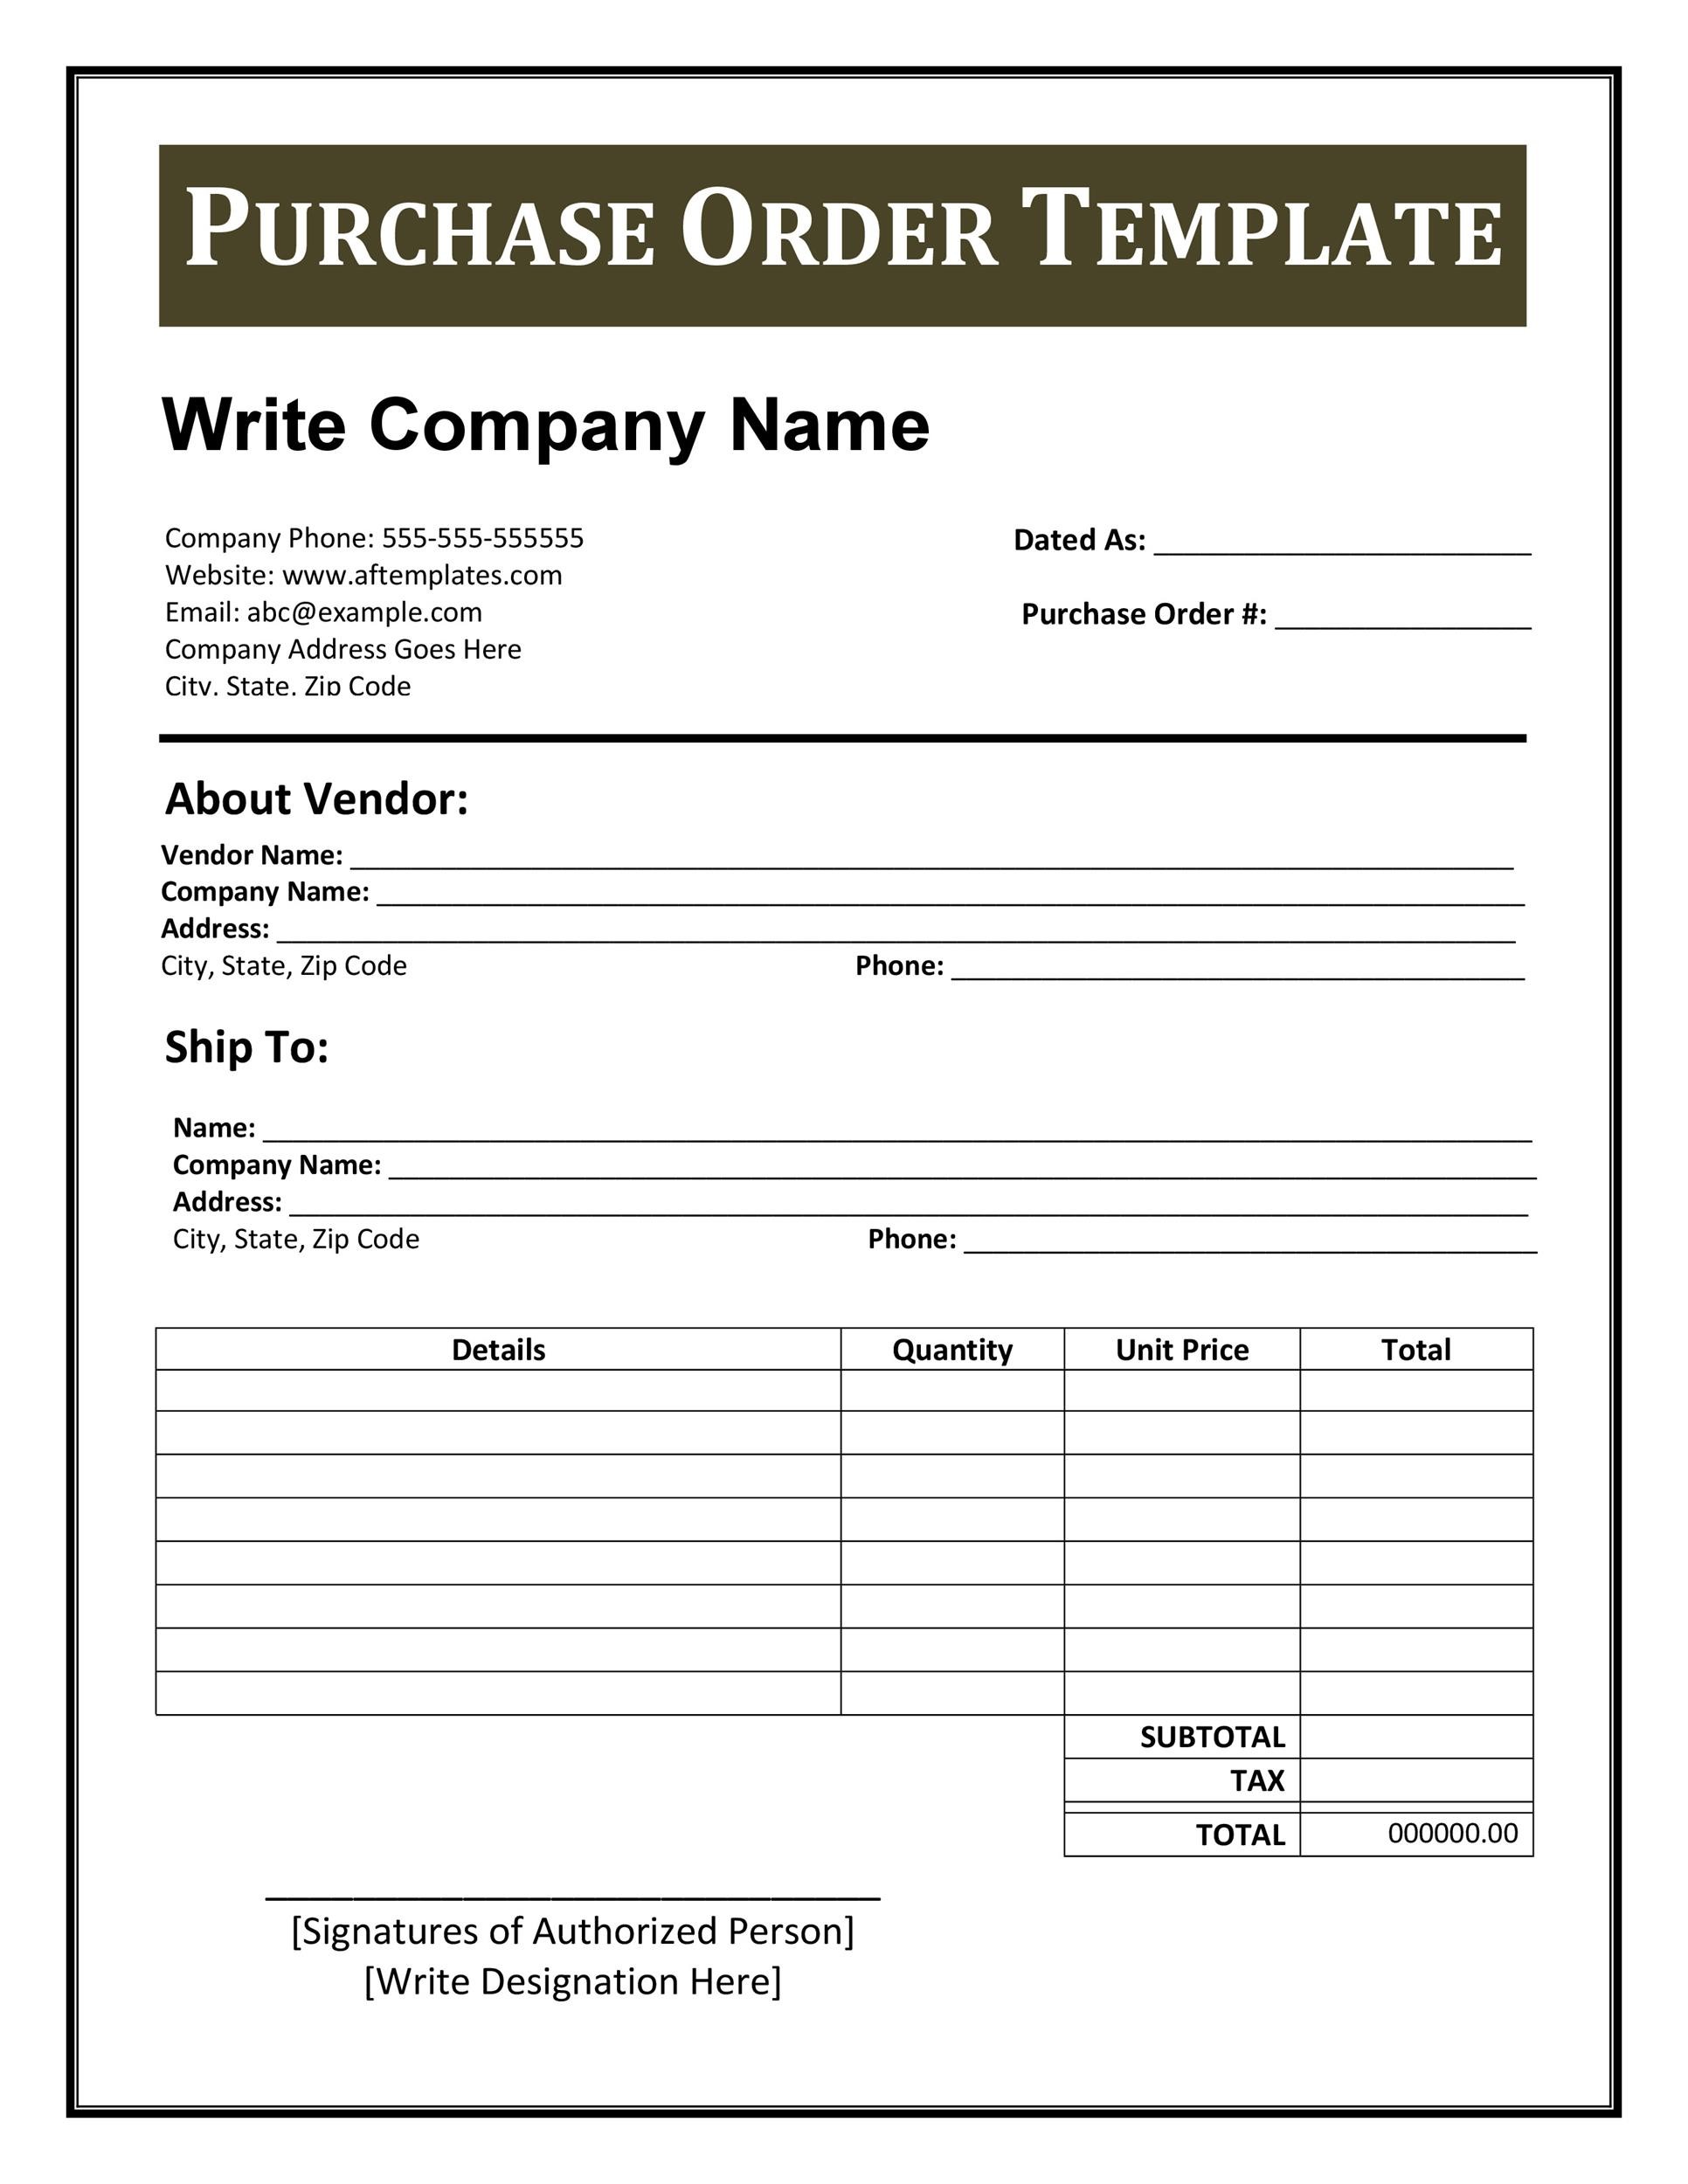 Vendor Information Form Template Excel from templatelab.com